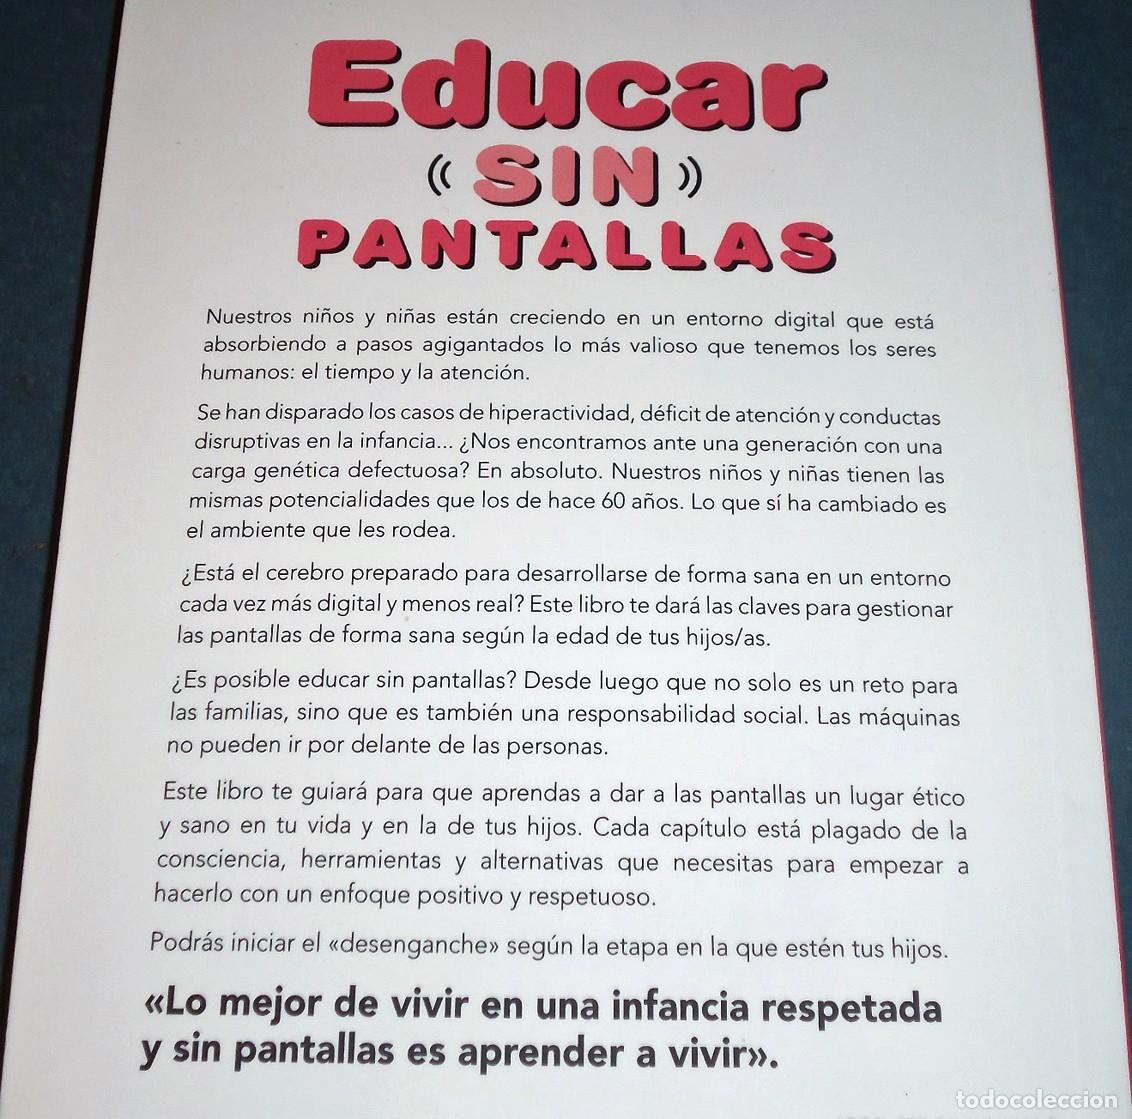 Libro Educar sin Pantallas: Marta Prada